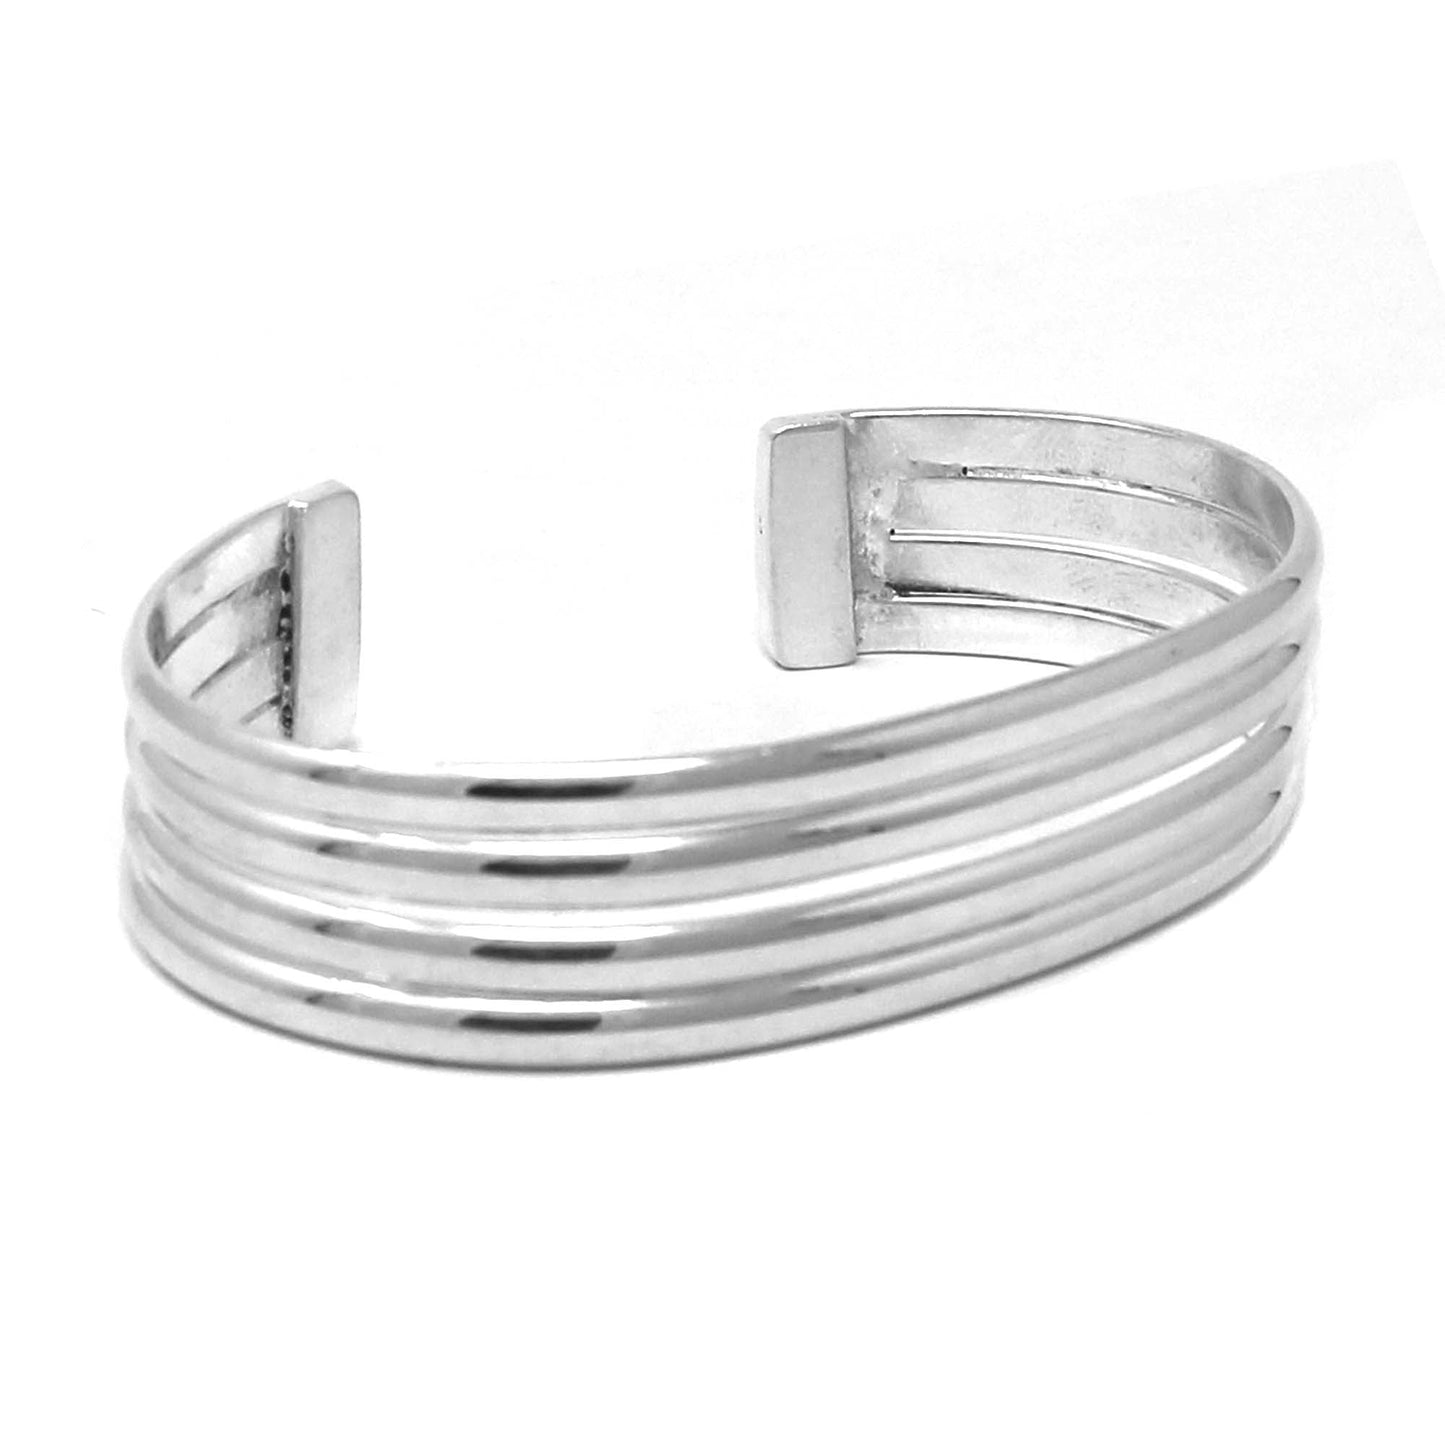 alpaca-silver-overlay-cuff-bracelet-four-bar-design